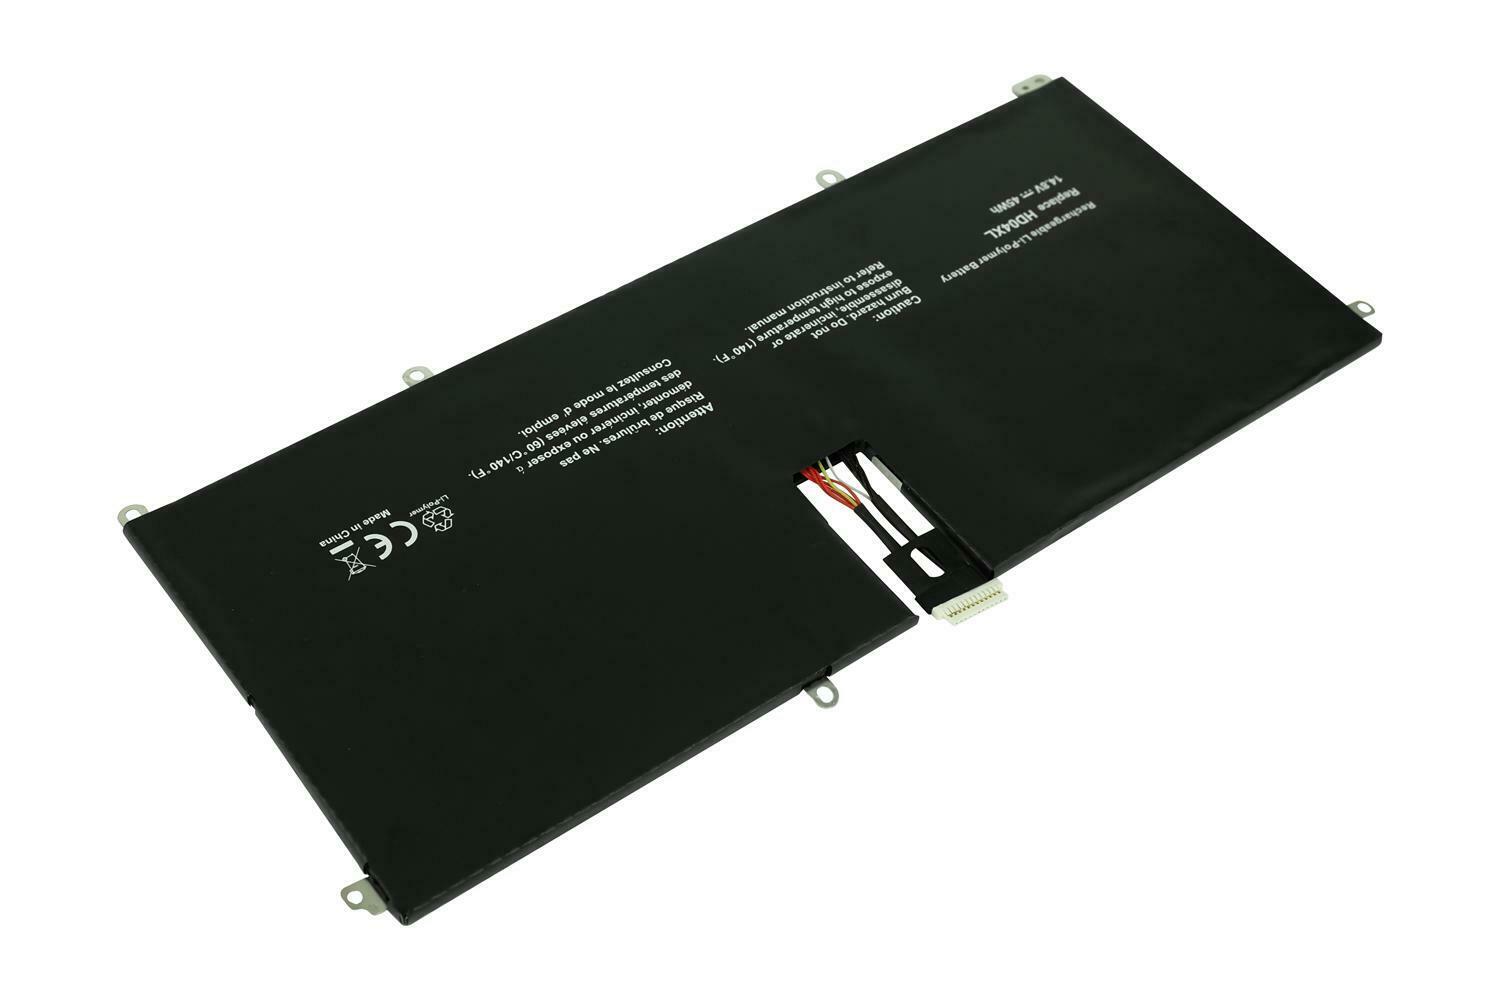 HD04XL HSTNN-IB3V 685989-001 HP SPECTRE XT 13 B000 2113TU 2023TU compatible battery